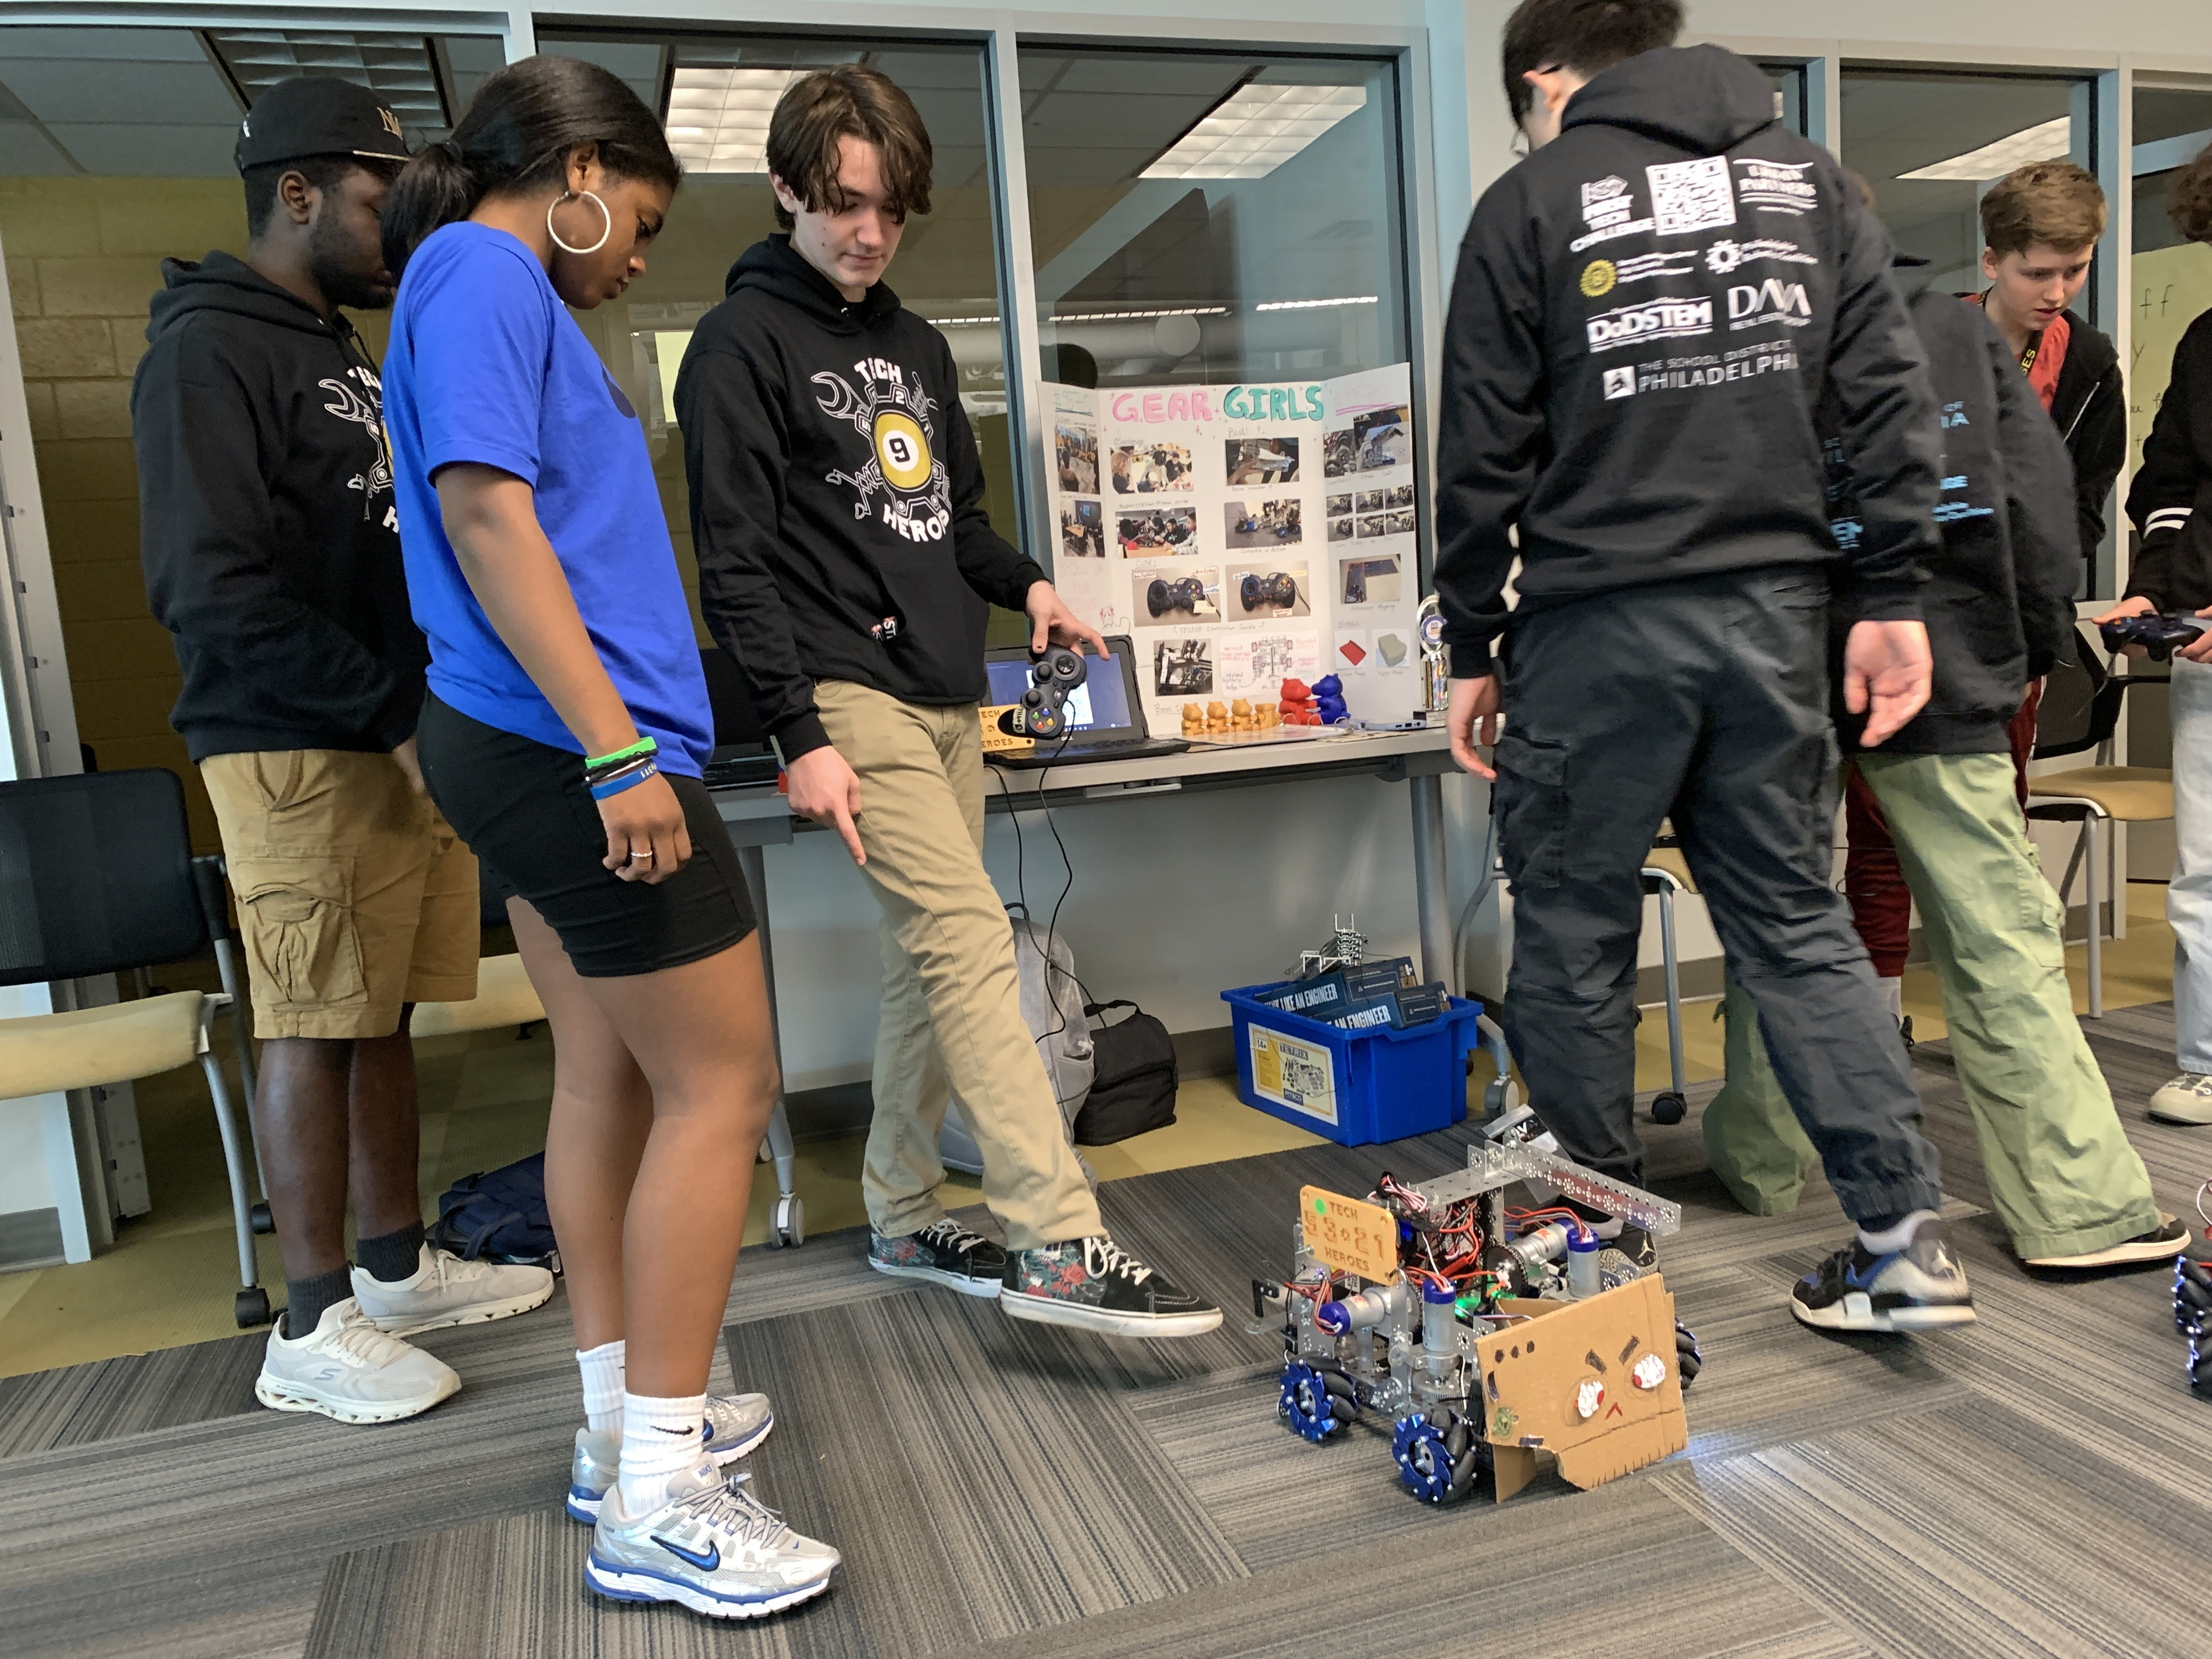 Google grant to help expand middle school robotics programs across Pa.